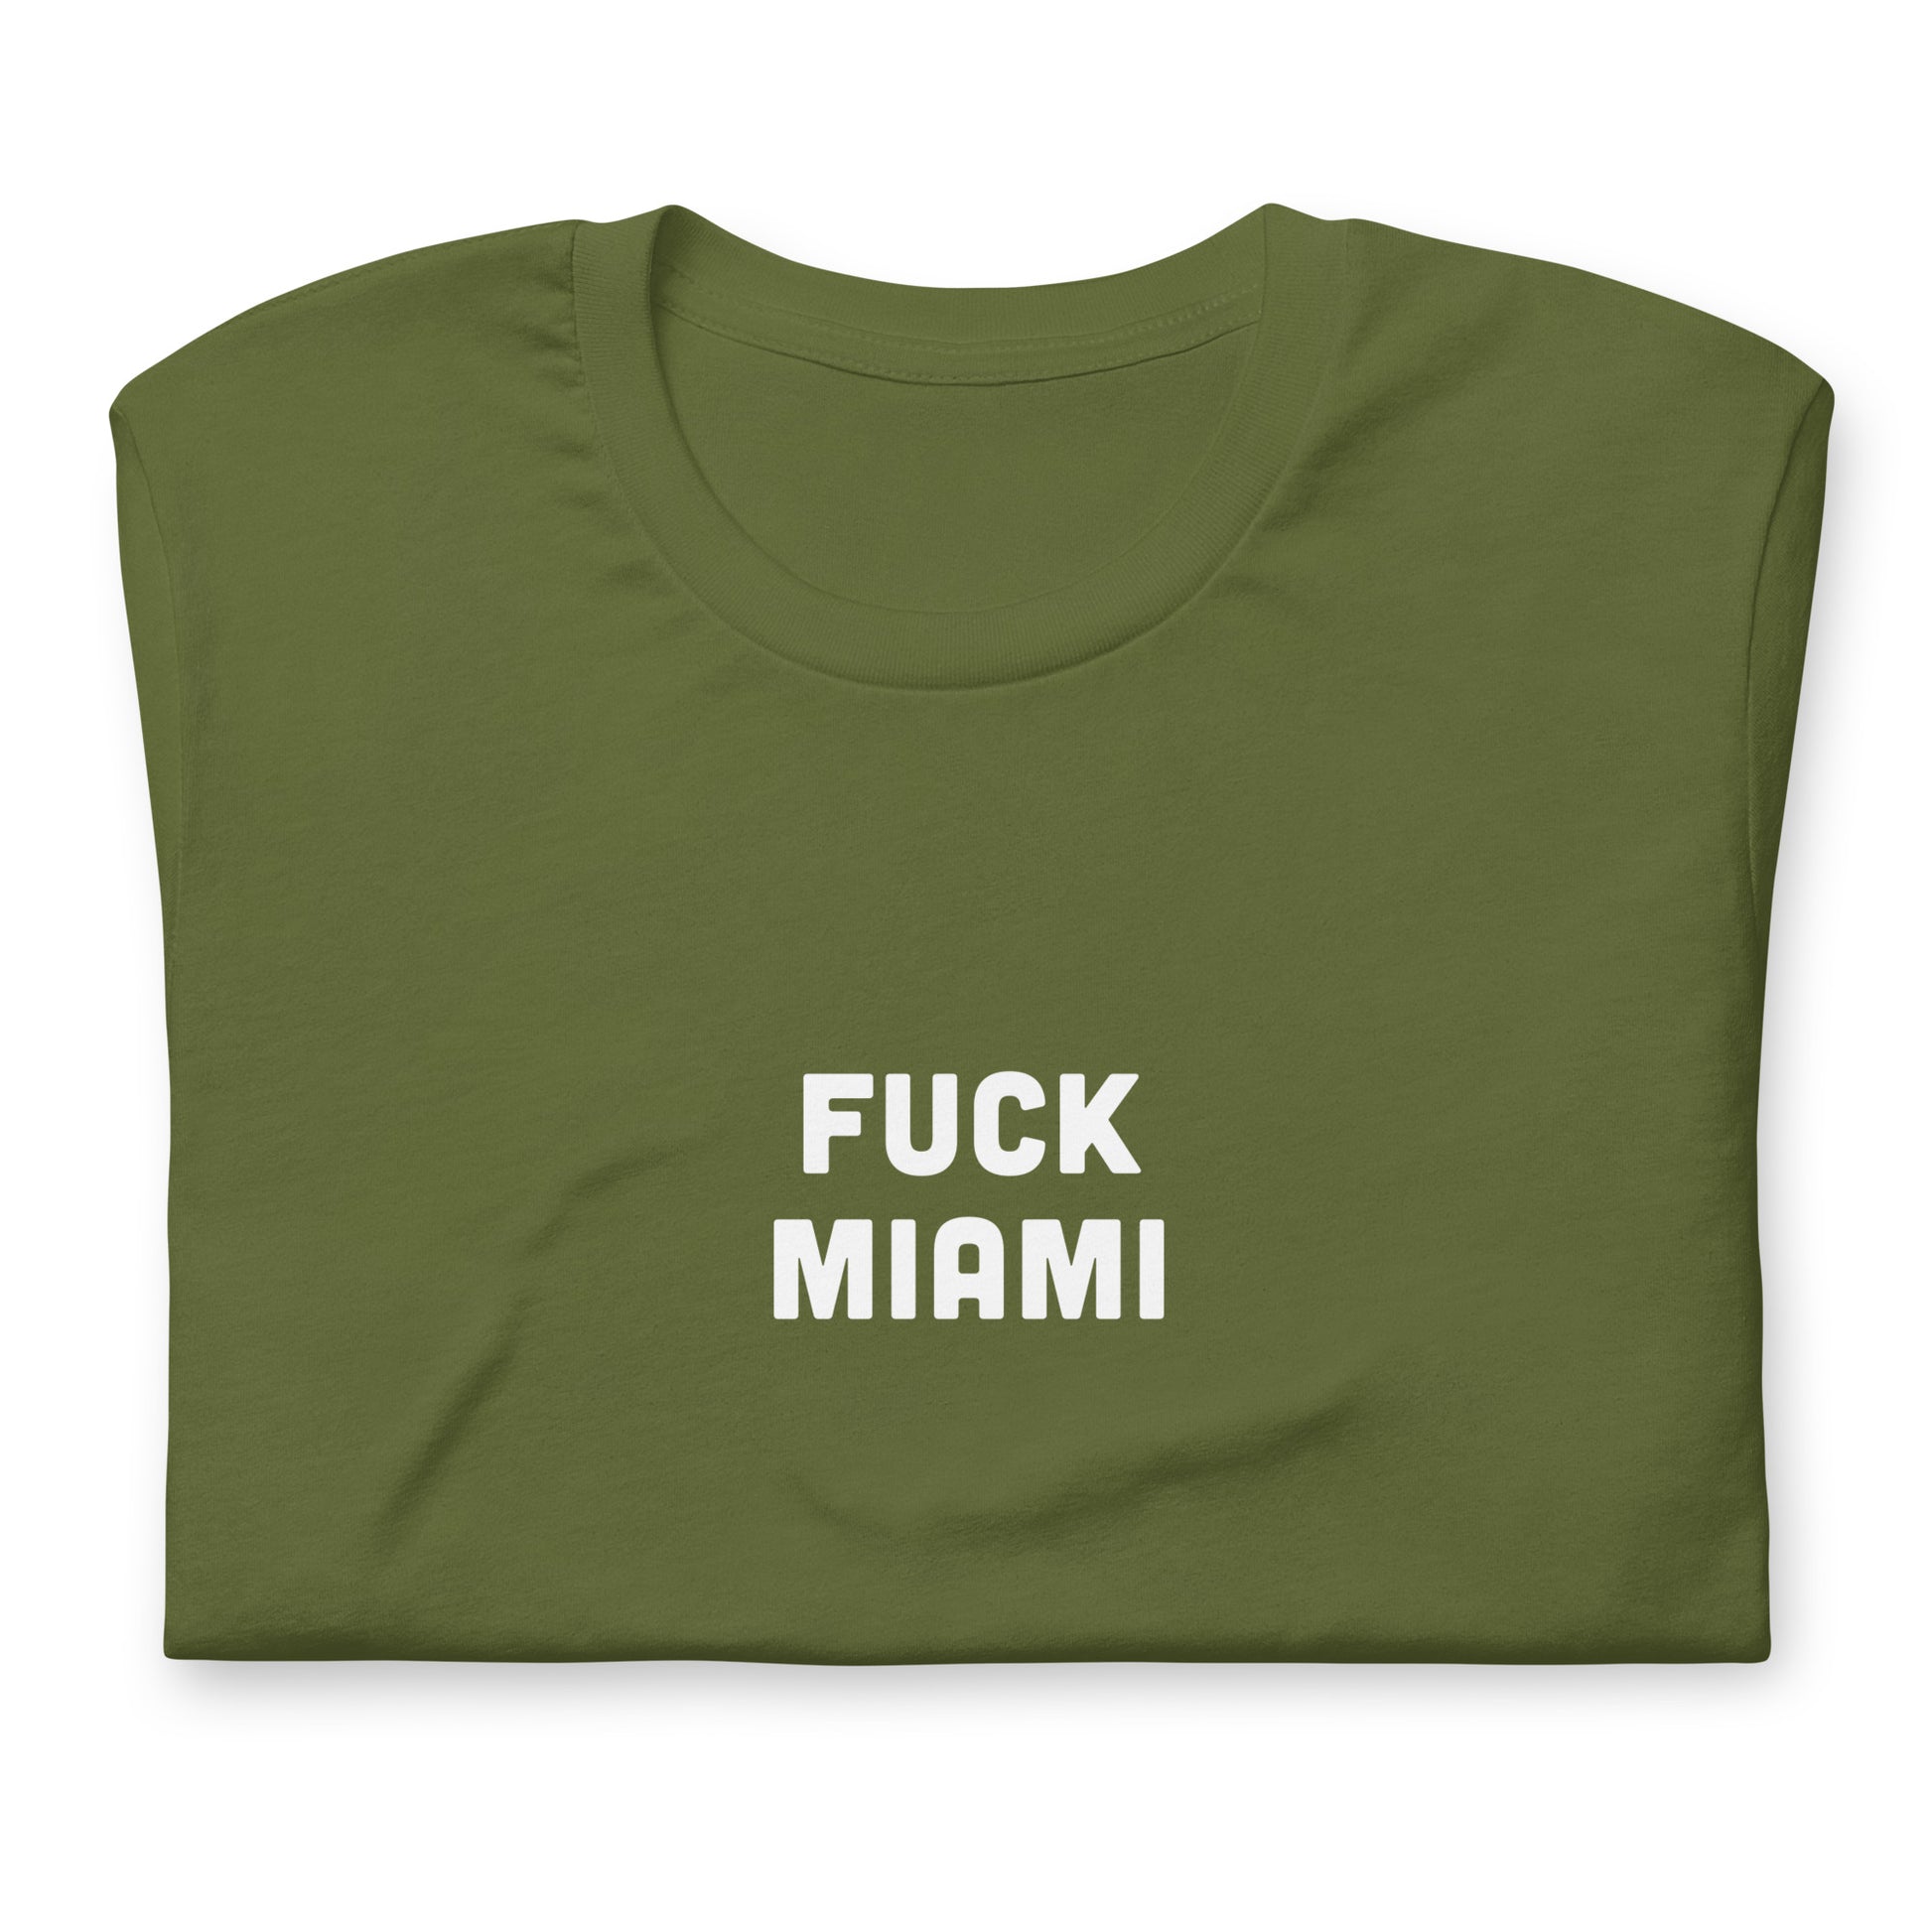 Fuck Miami T-Shirt Size XL Color Navy